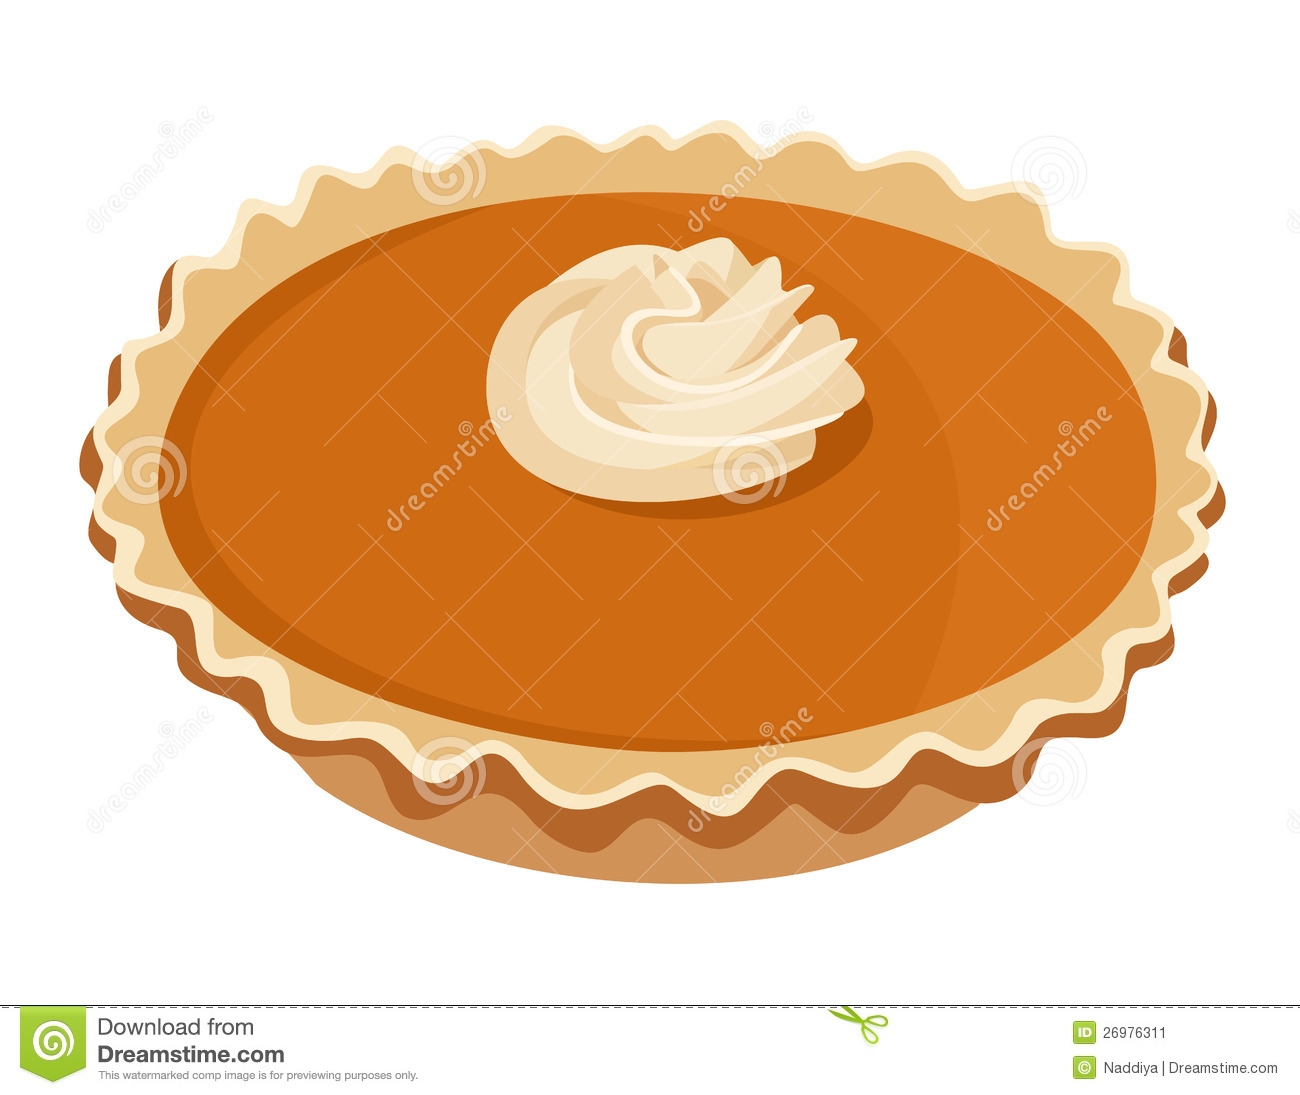 Pumpkin Pie  Vector Illustration  Stock Image   Image  26976311